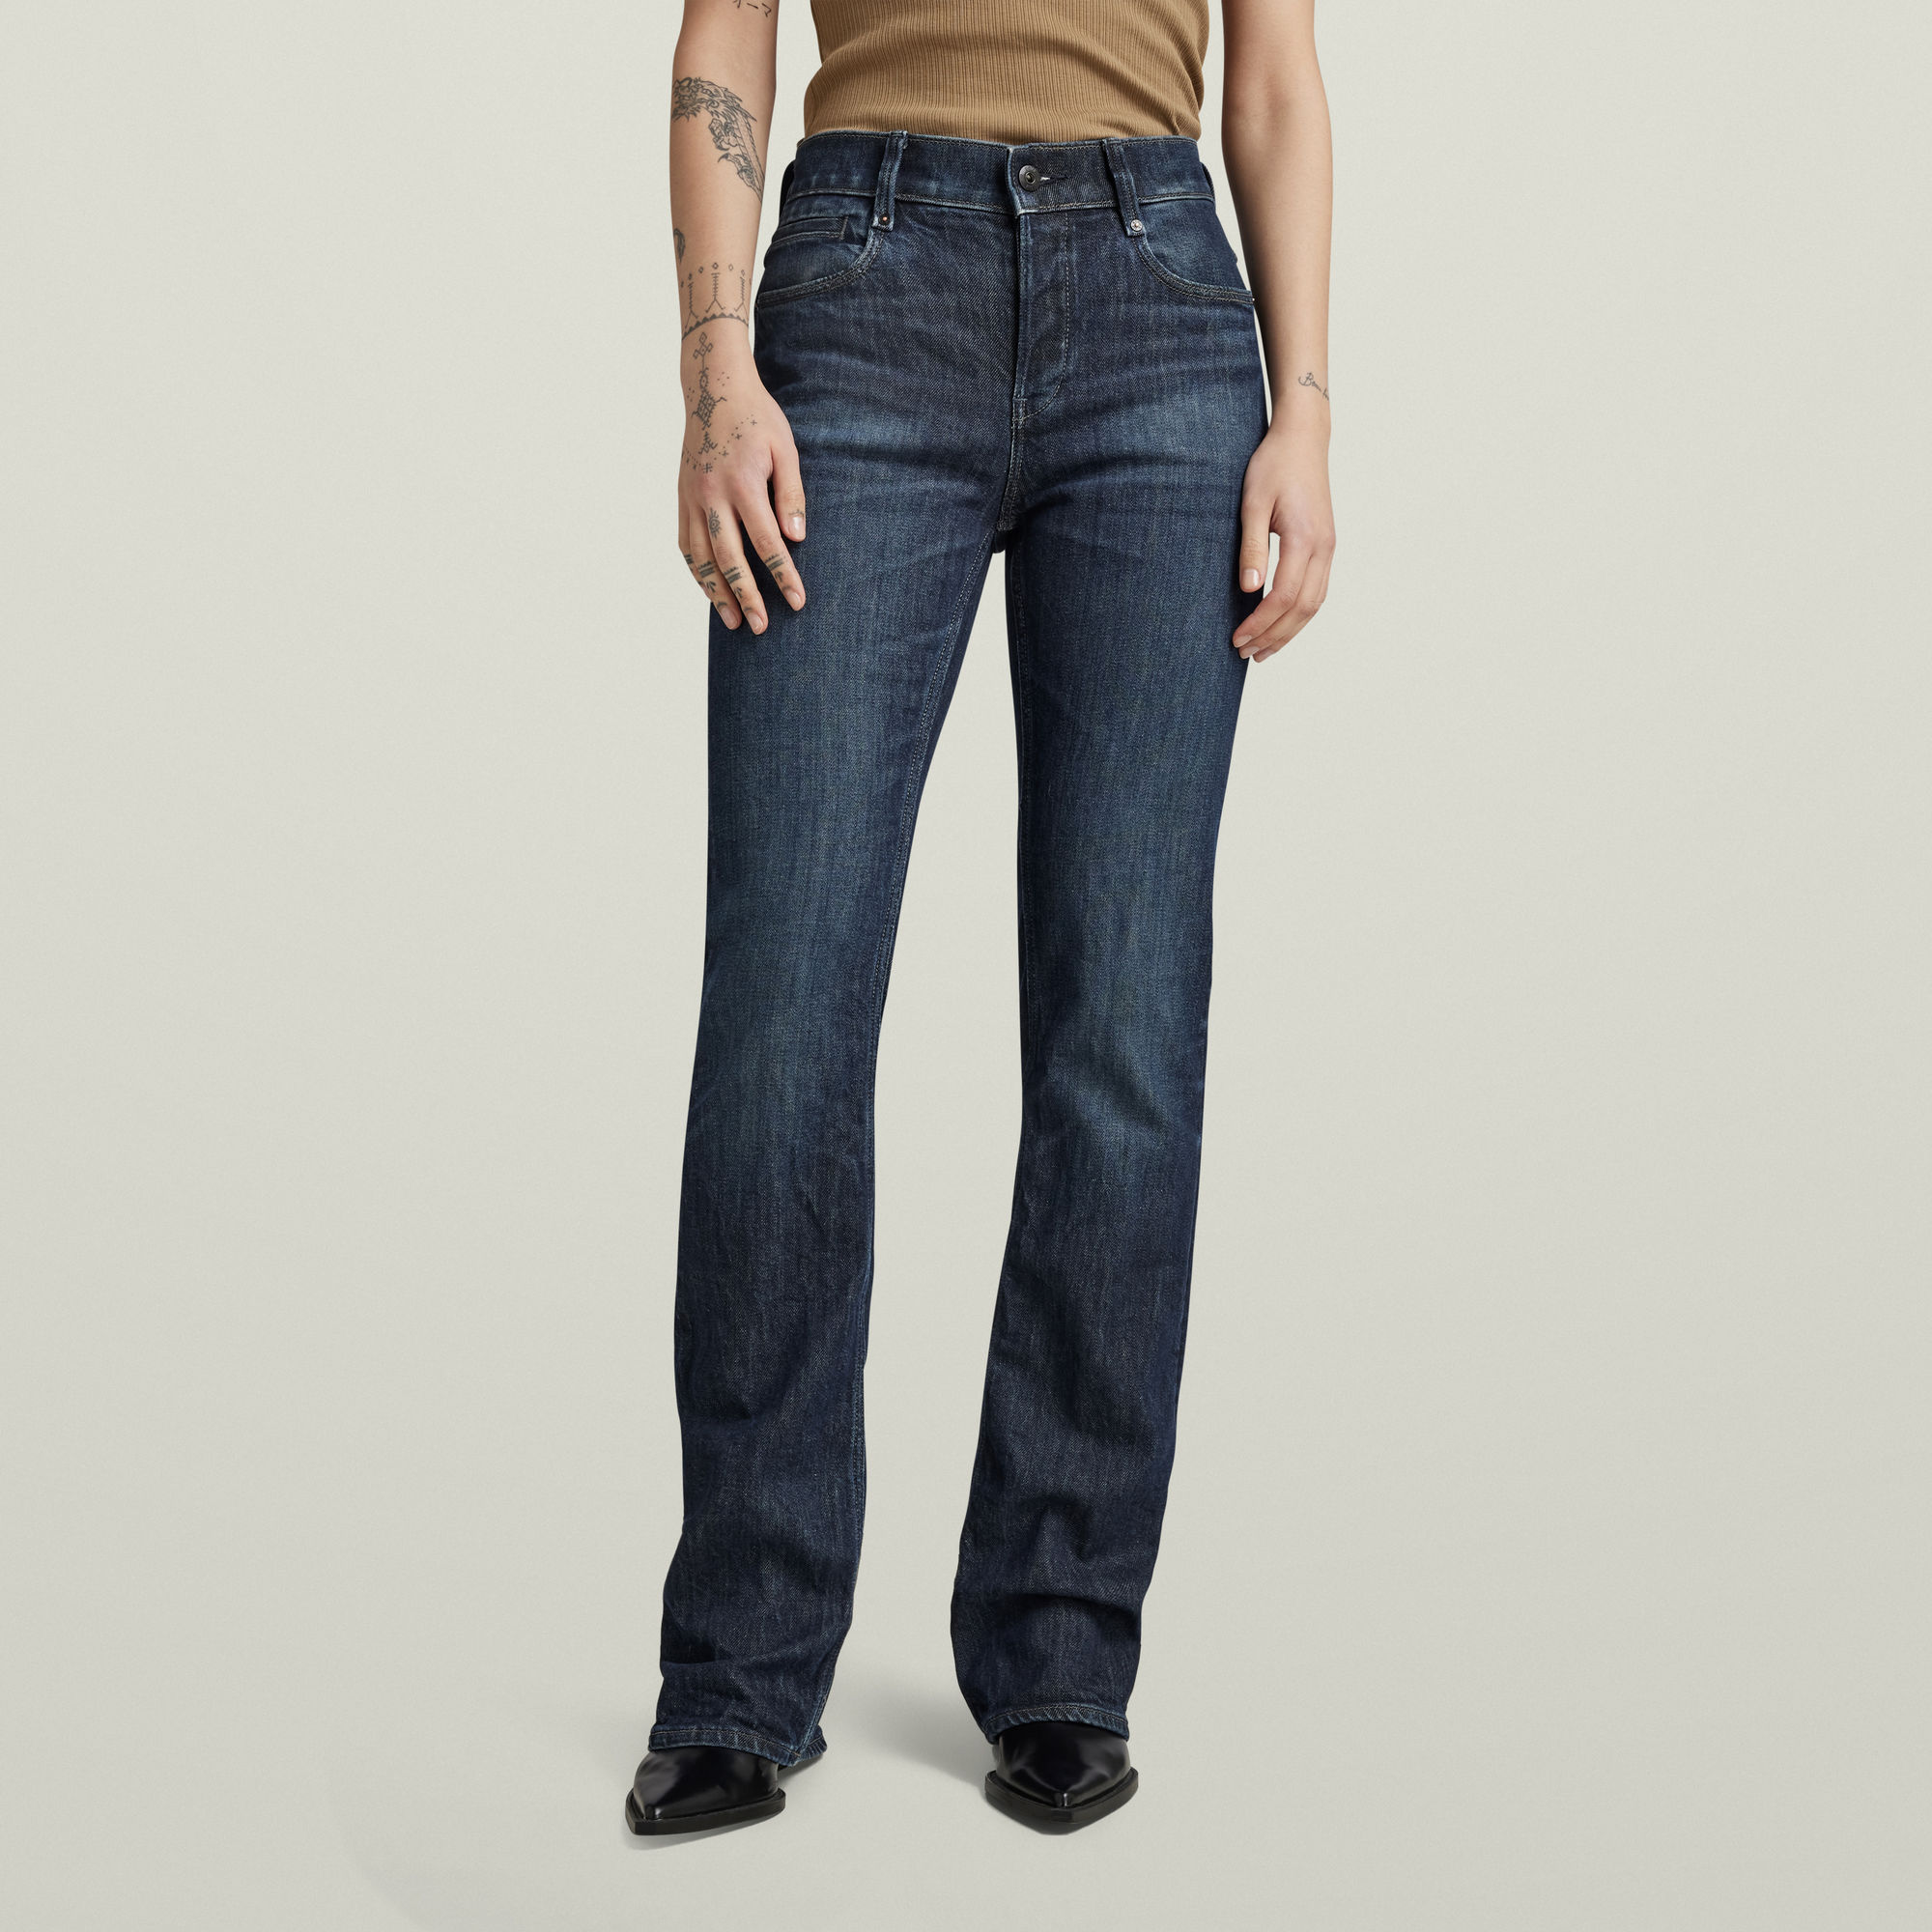 

Noxer Bootcut Jeans - Dark blue - Women